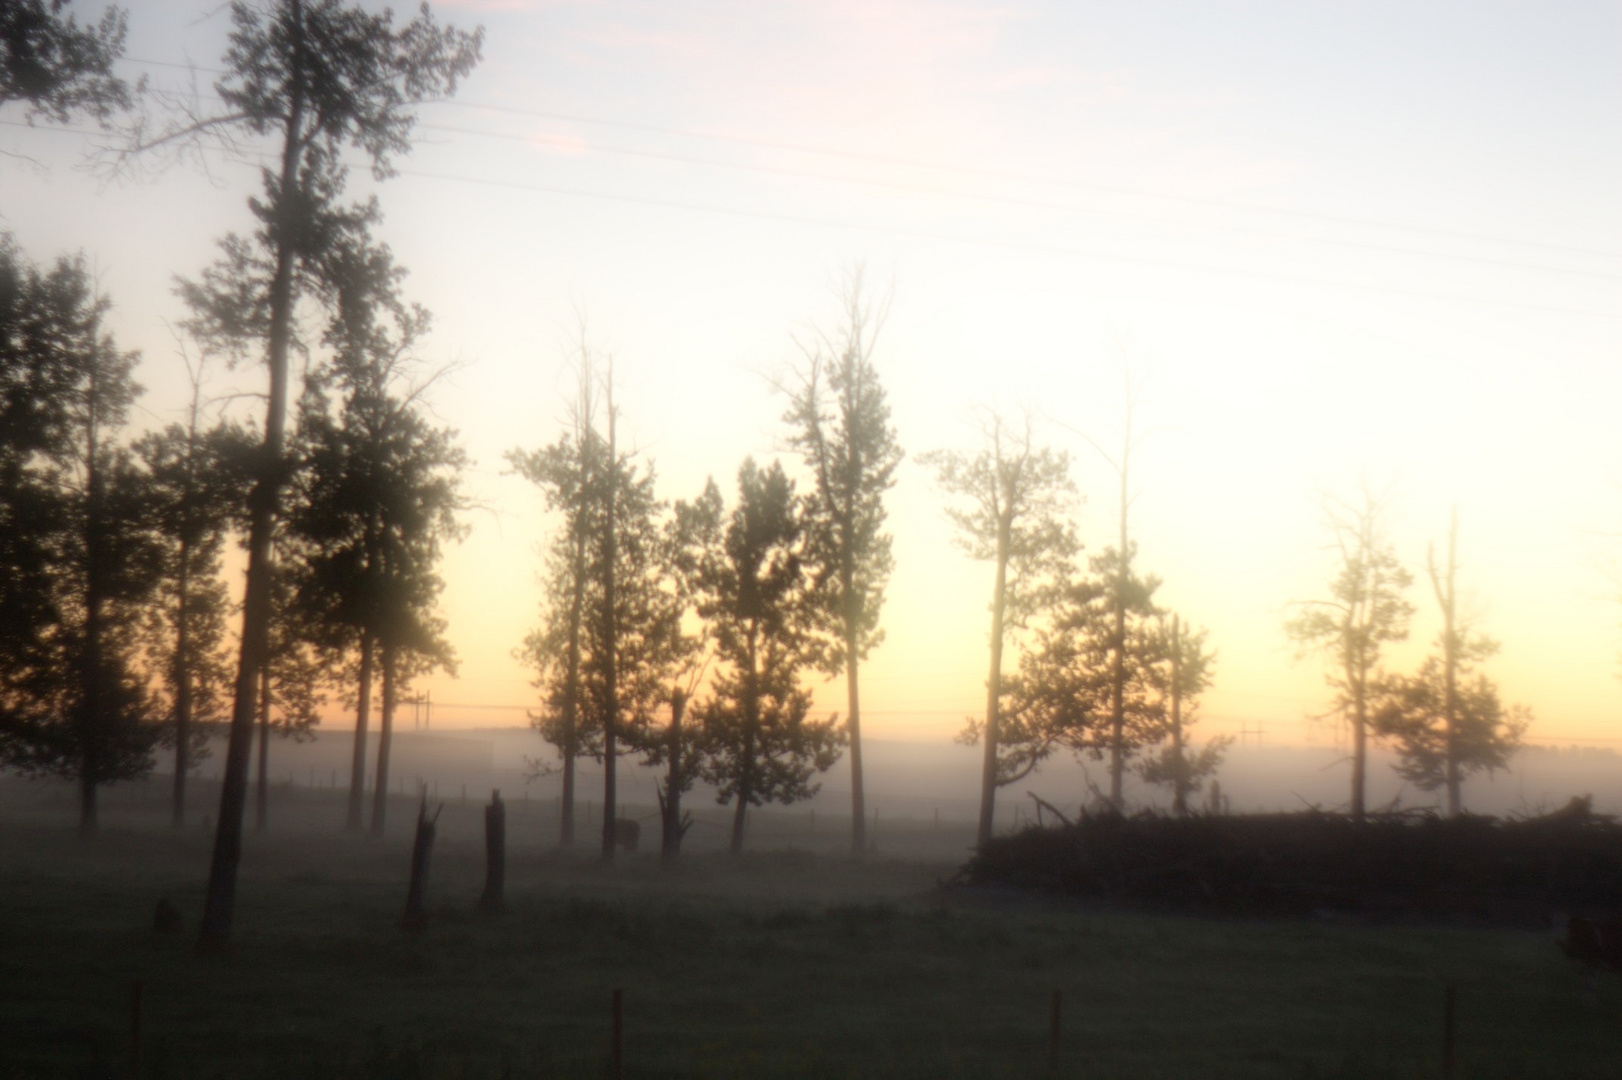 Misty Morning